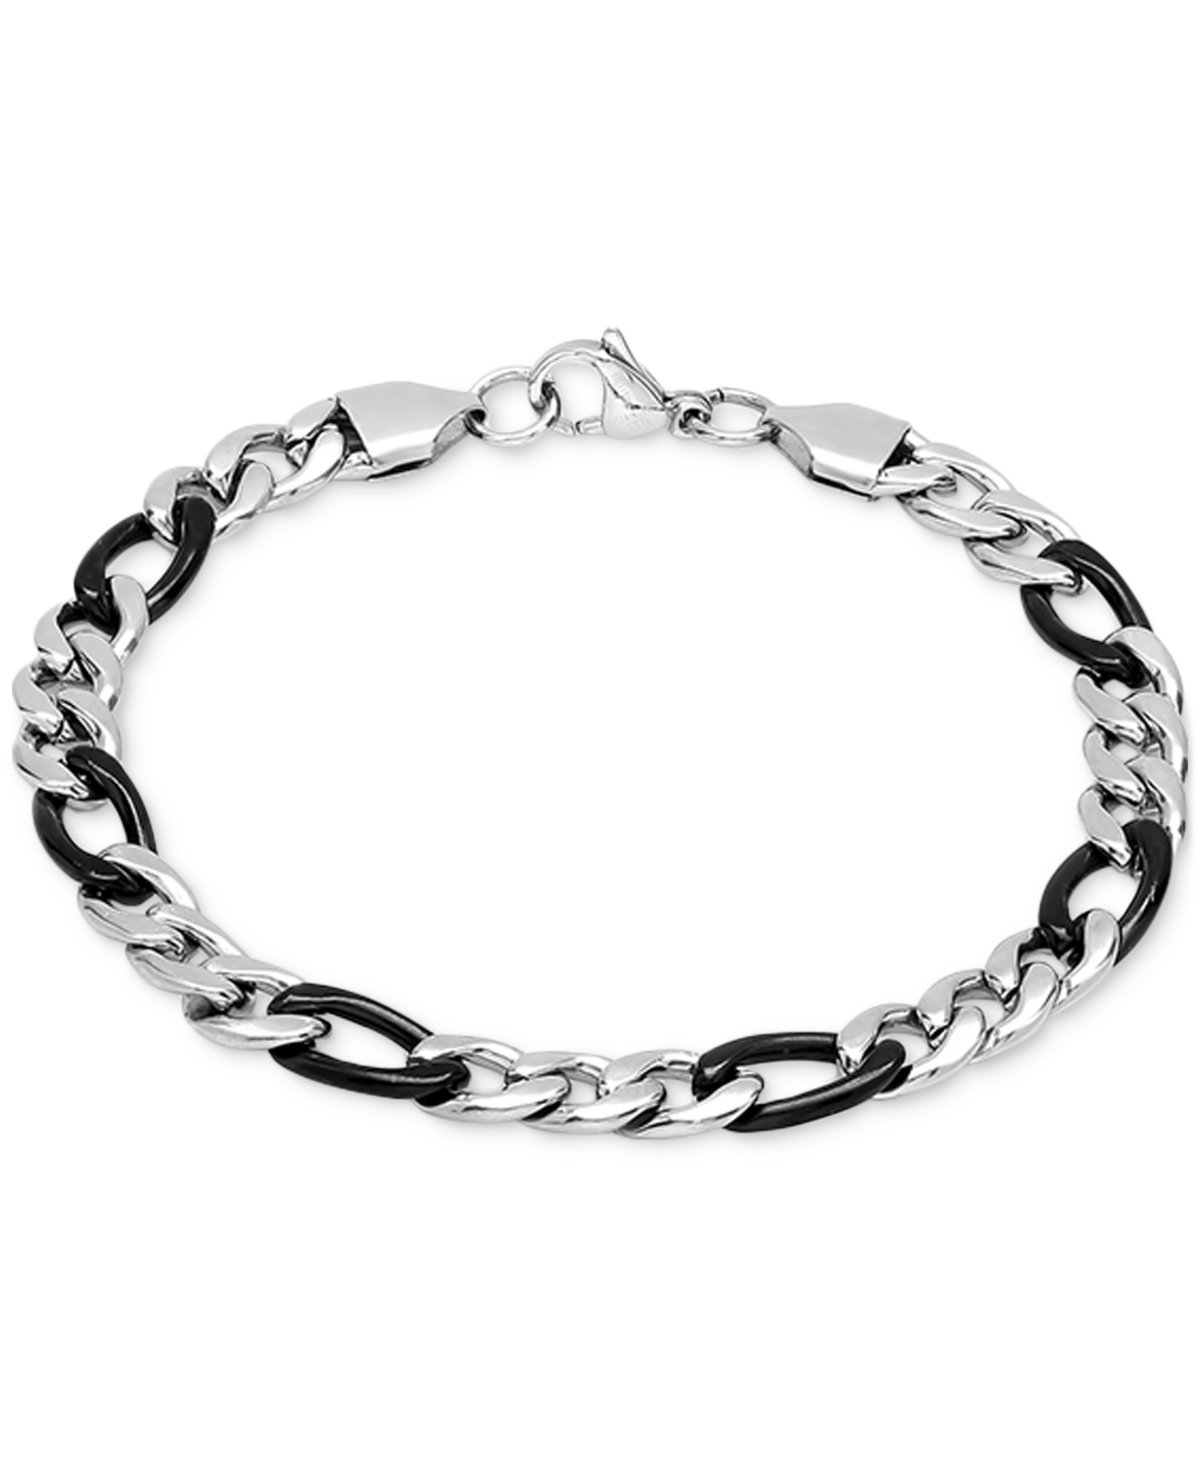 Men's Two-Tone Stainless Steel Figaro Link Chain Bracelet - Black, Silver